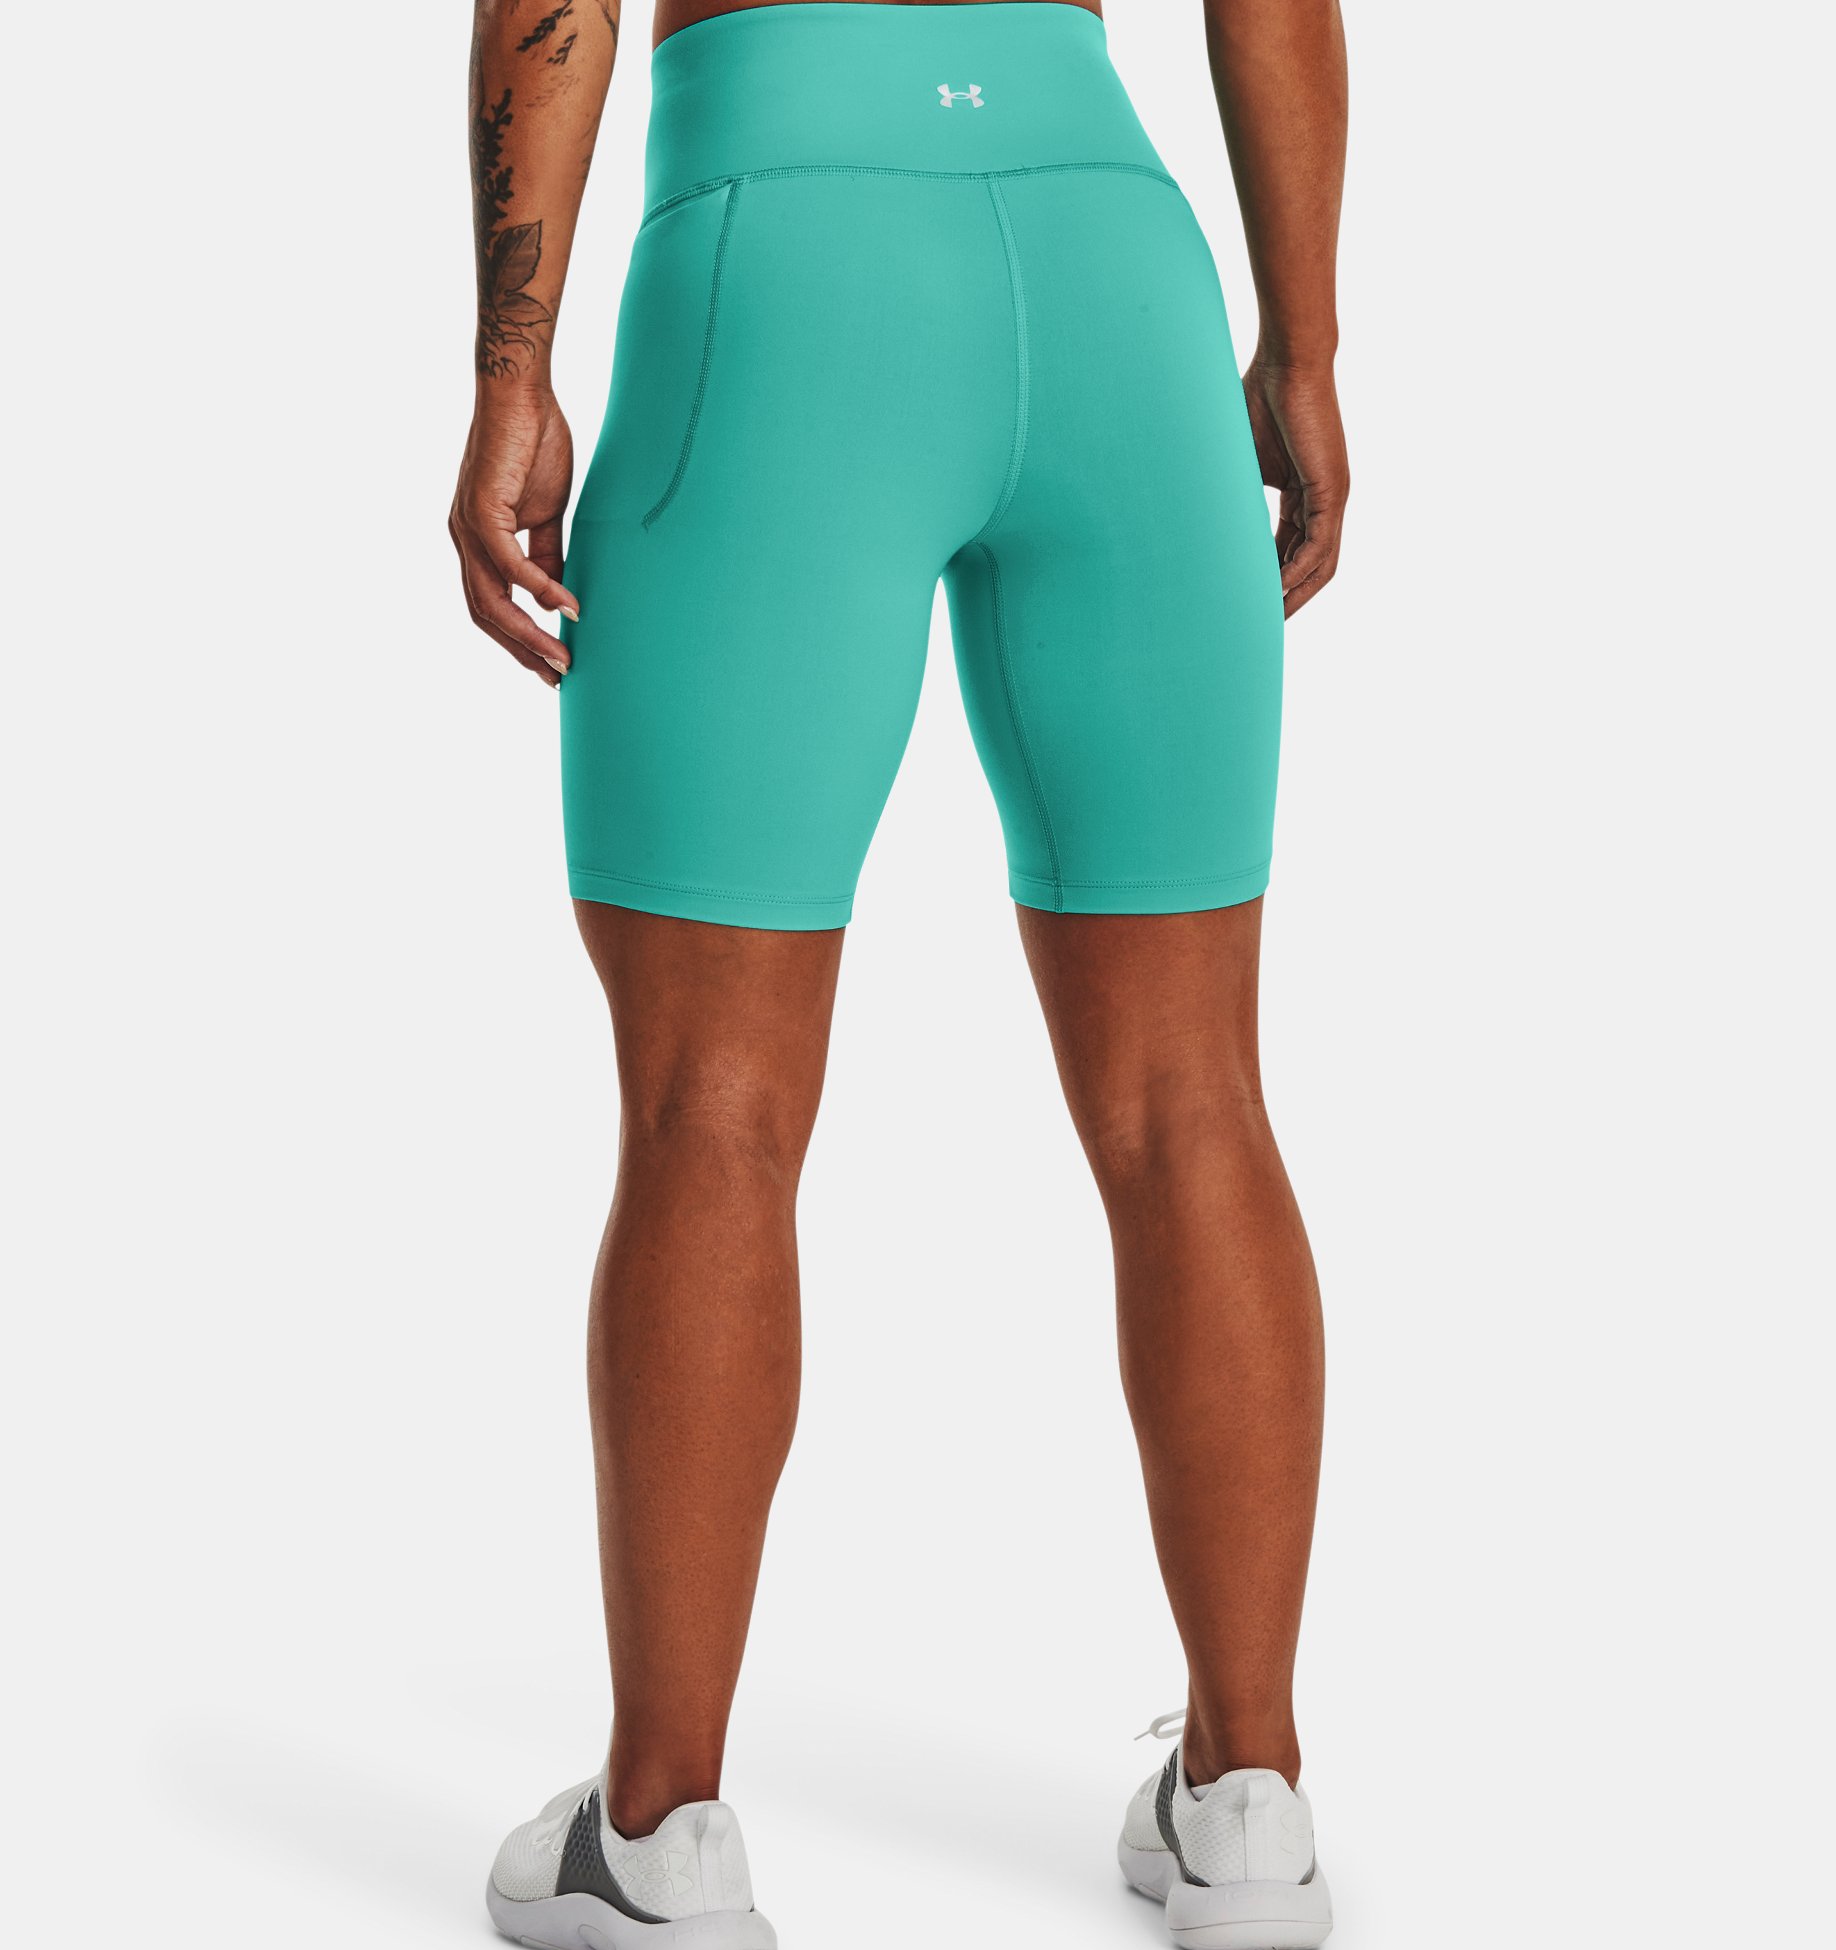 Ladies Men Gel Cycling Shorts Gym Pants Running Active Casual Biker Walking Soft 